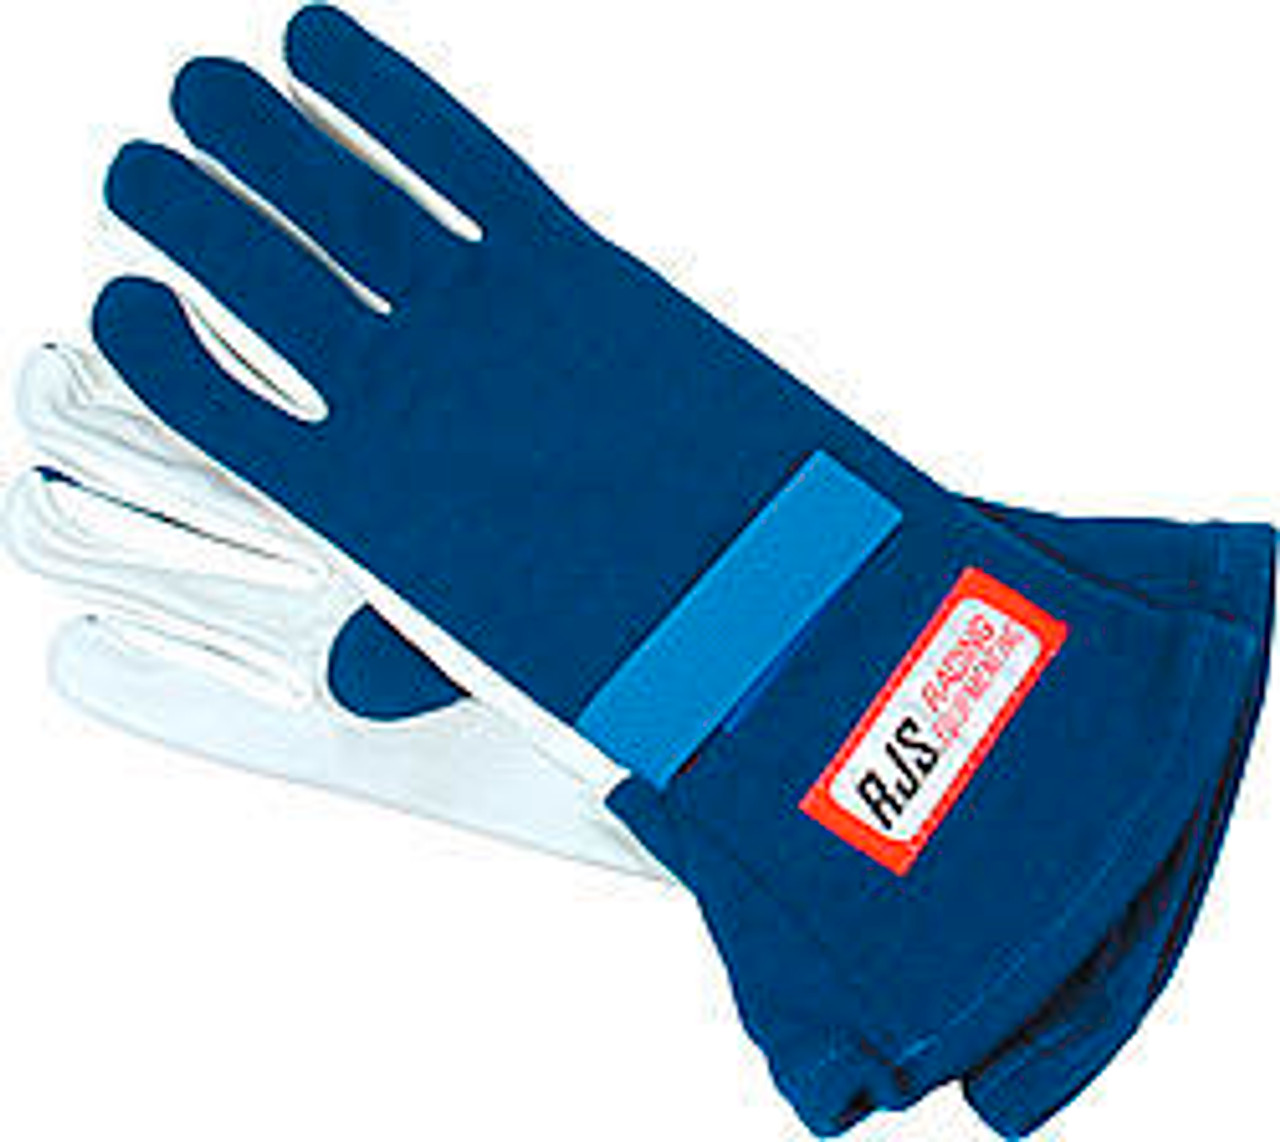 Gloves Nomex S/L LG Blue SFI-1 RJS600020305